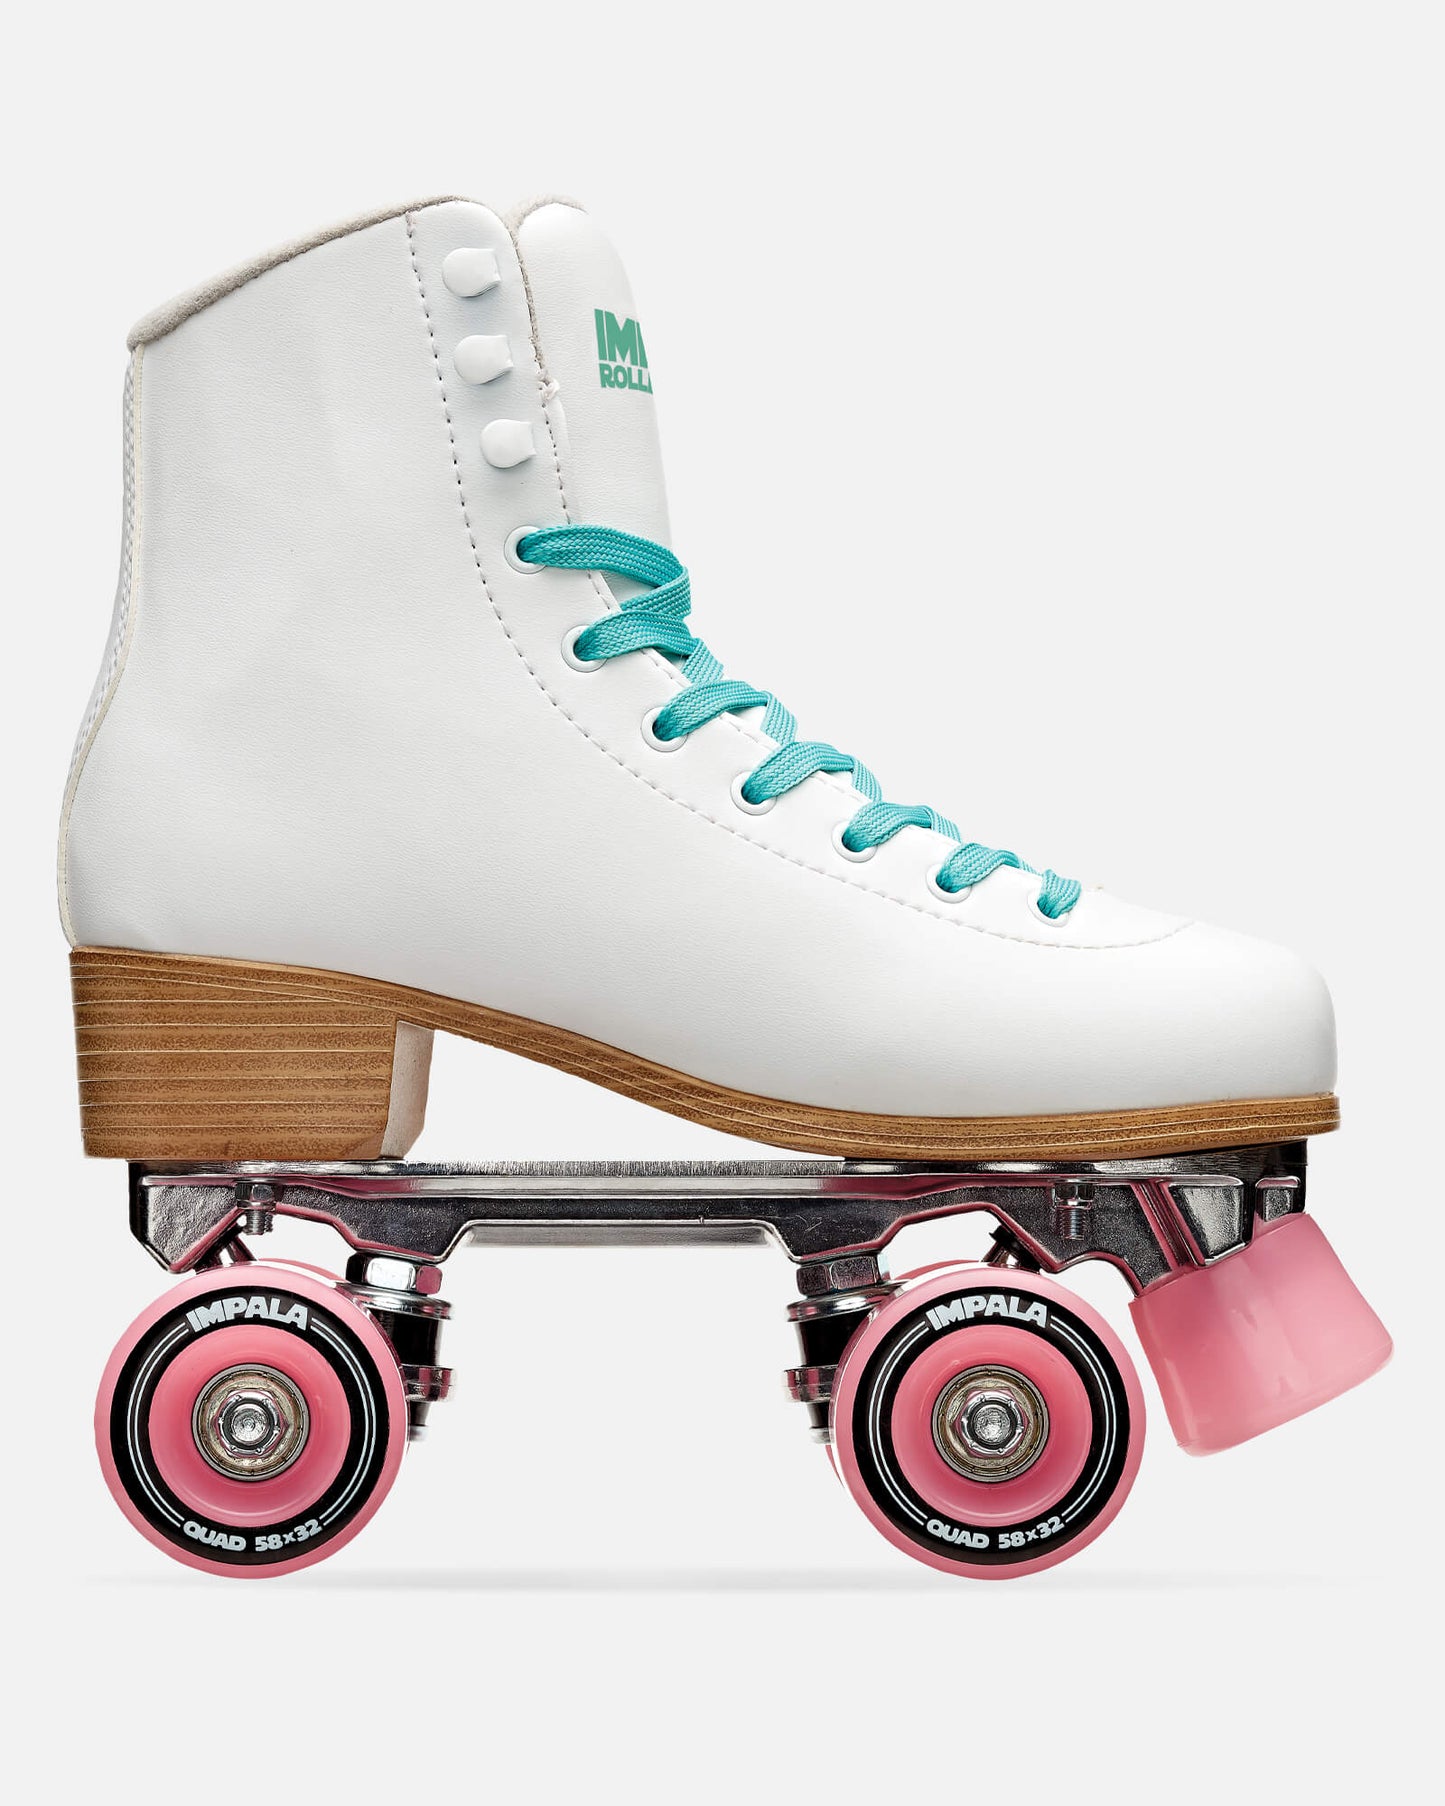 Impala Roller Skates - White